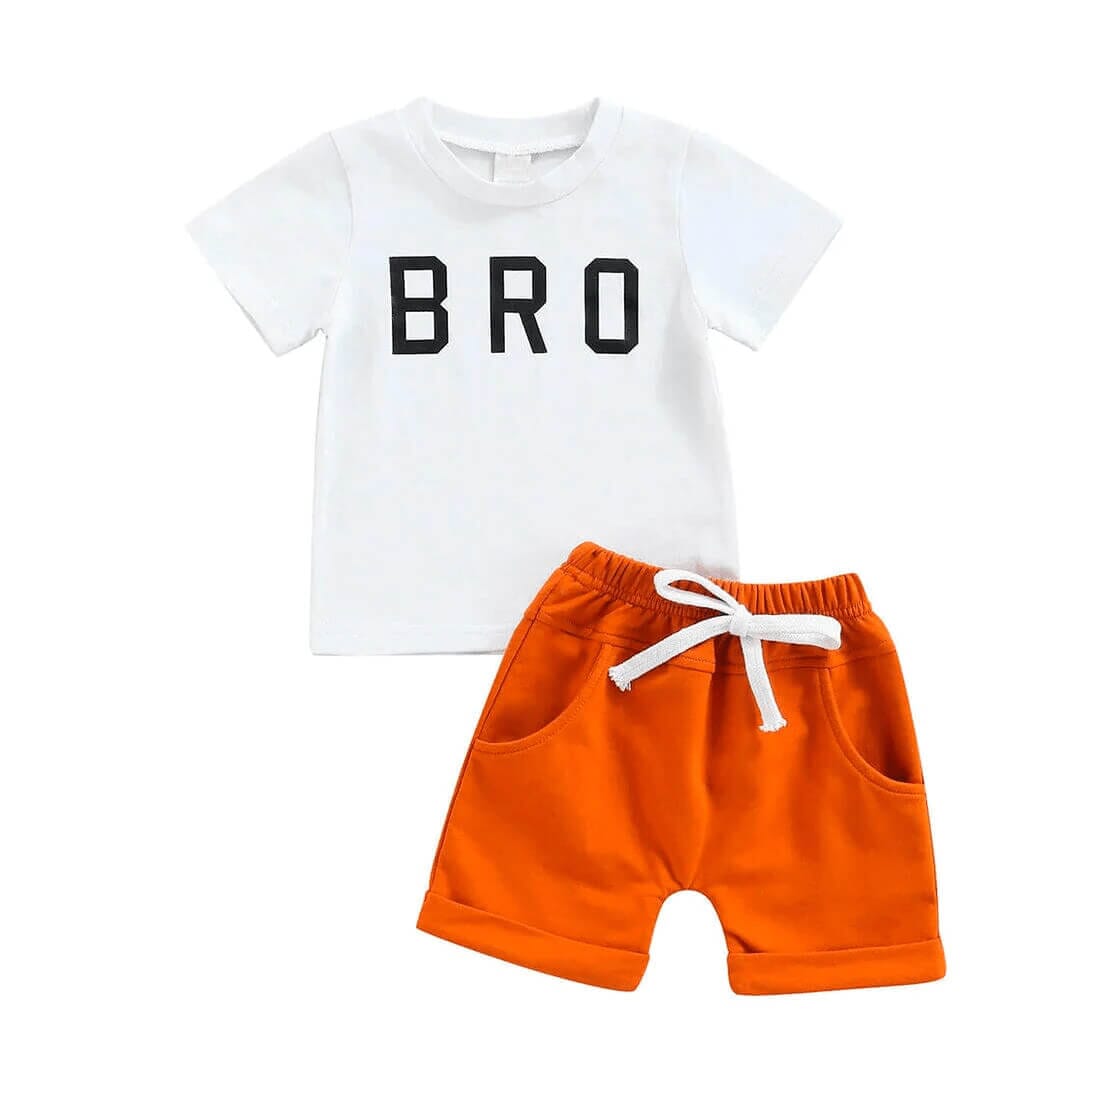 Short Sleeve Bro Baby Set   